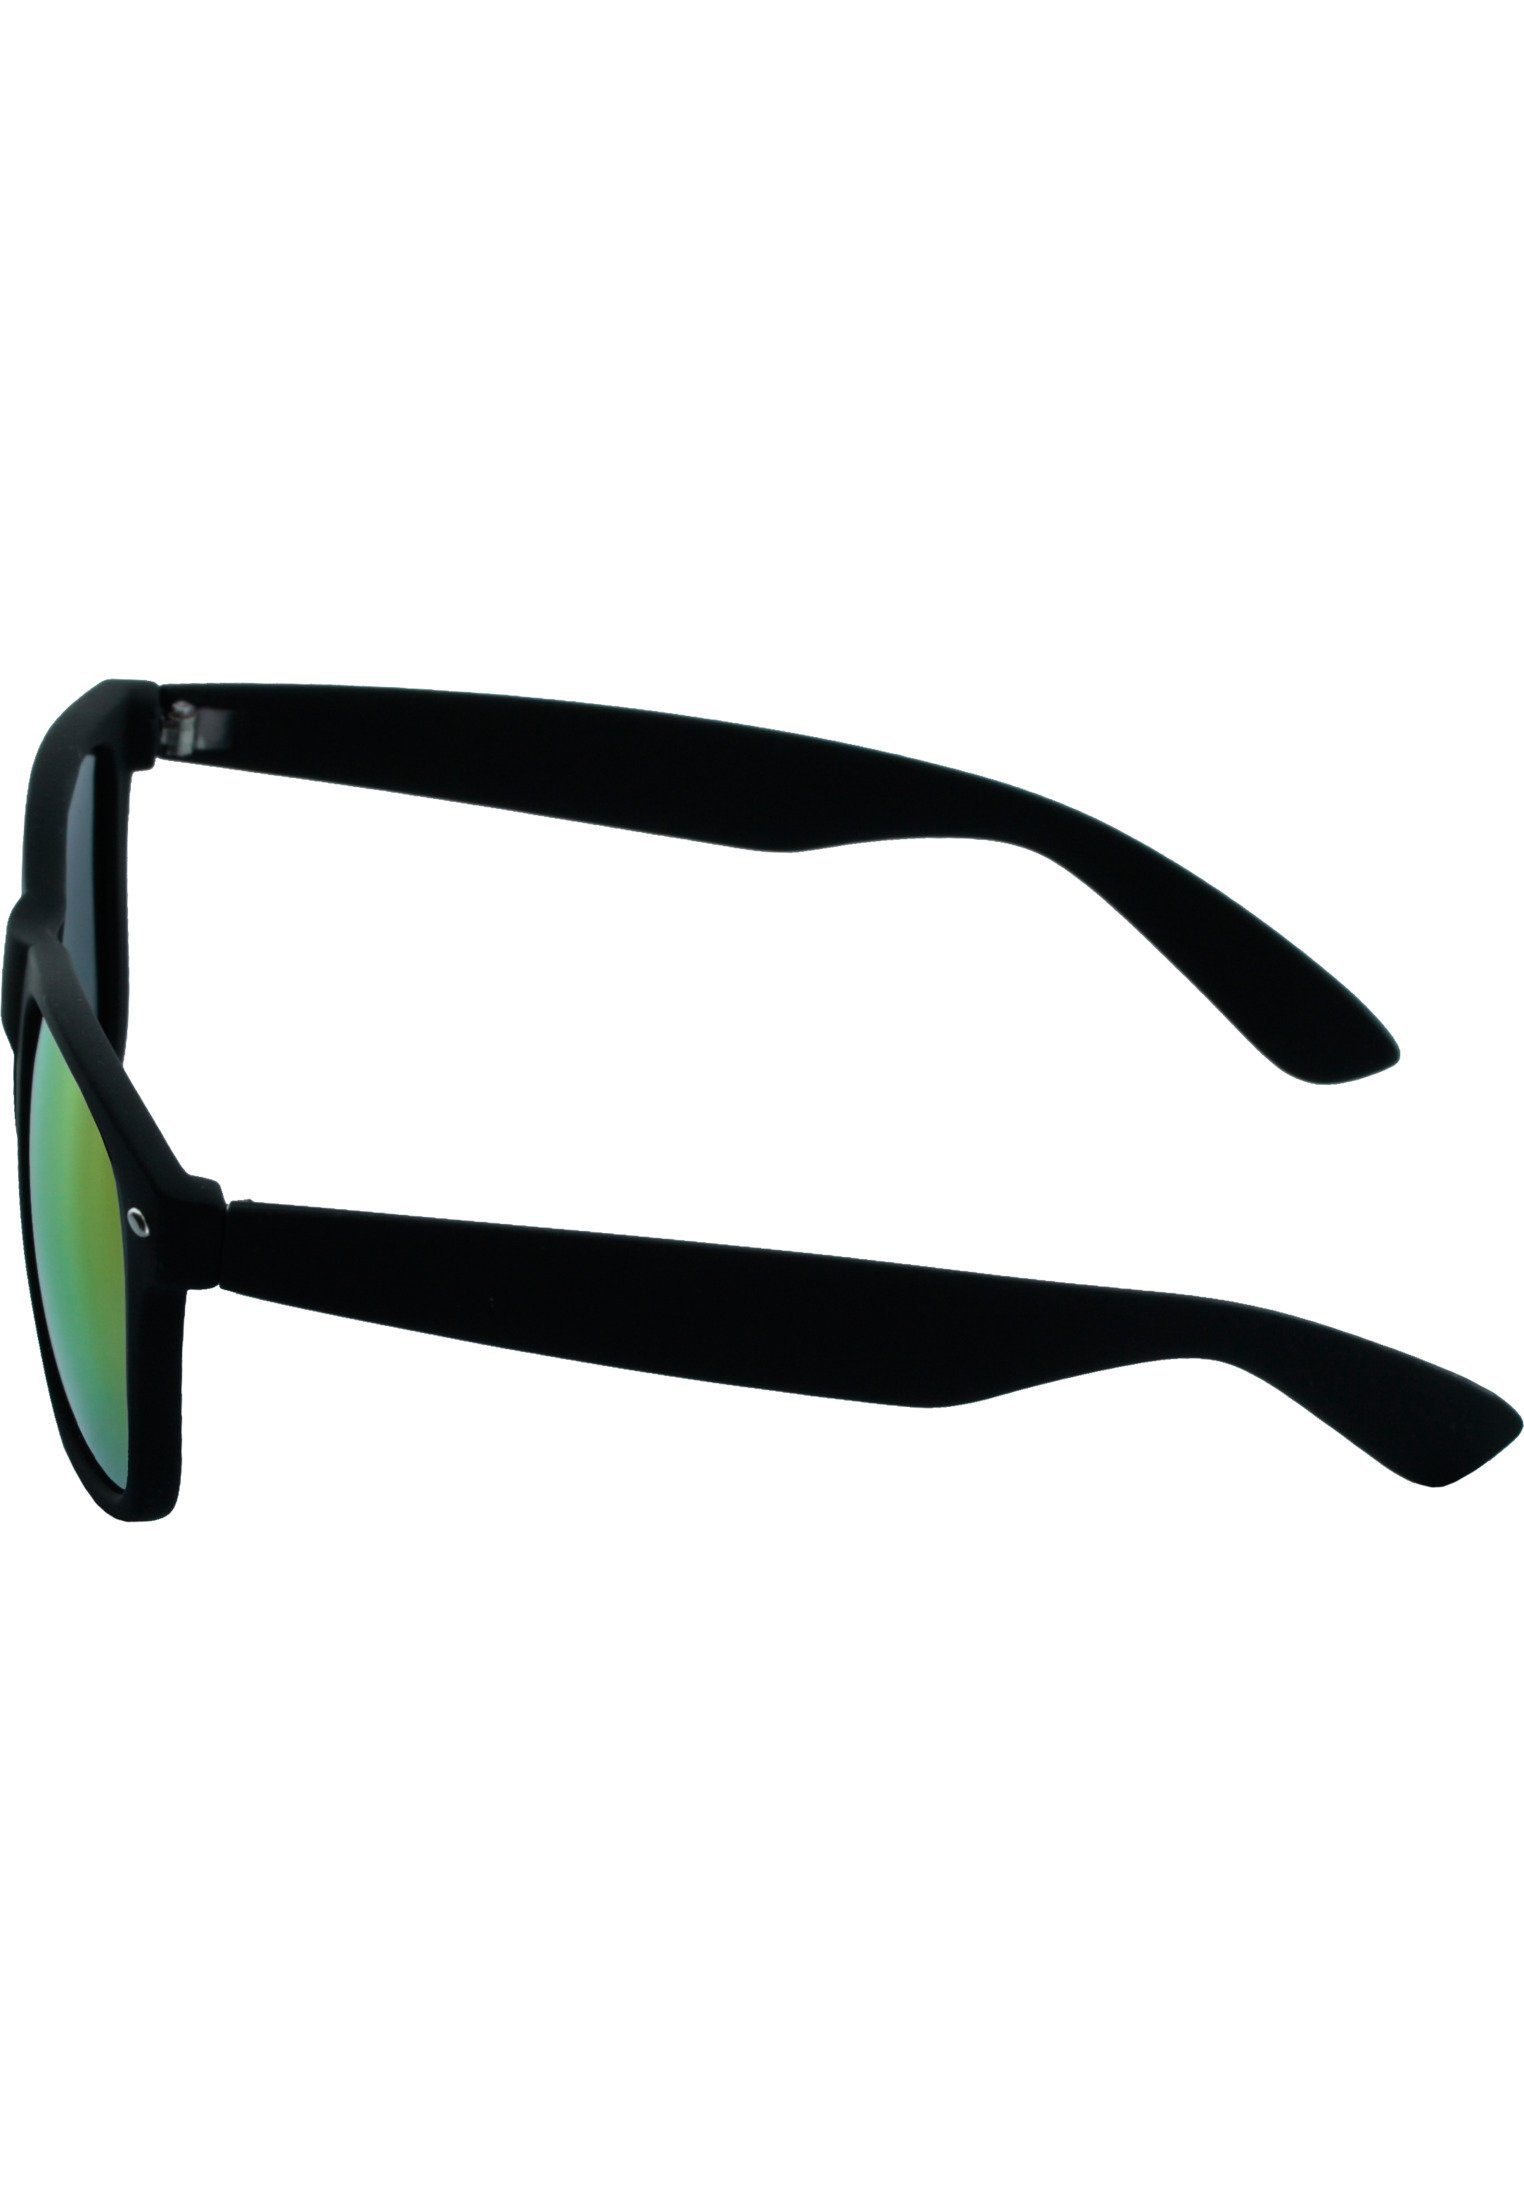 Sonnenbrille Likoma MSTRDS Mirror Accessoires Sunglasses blk/grn